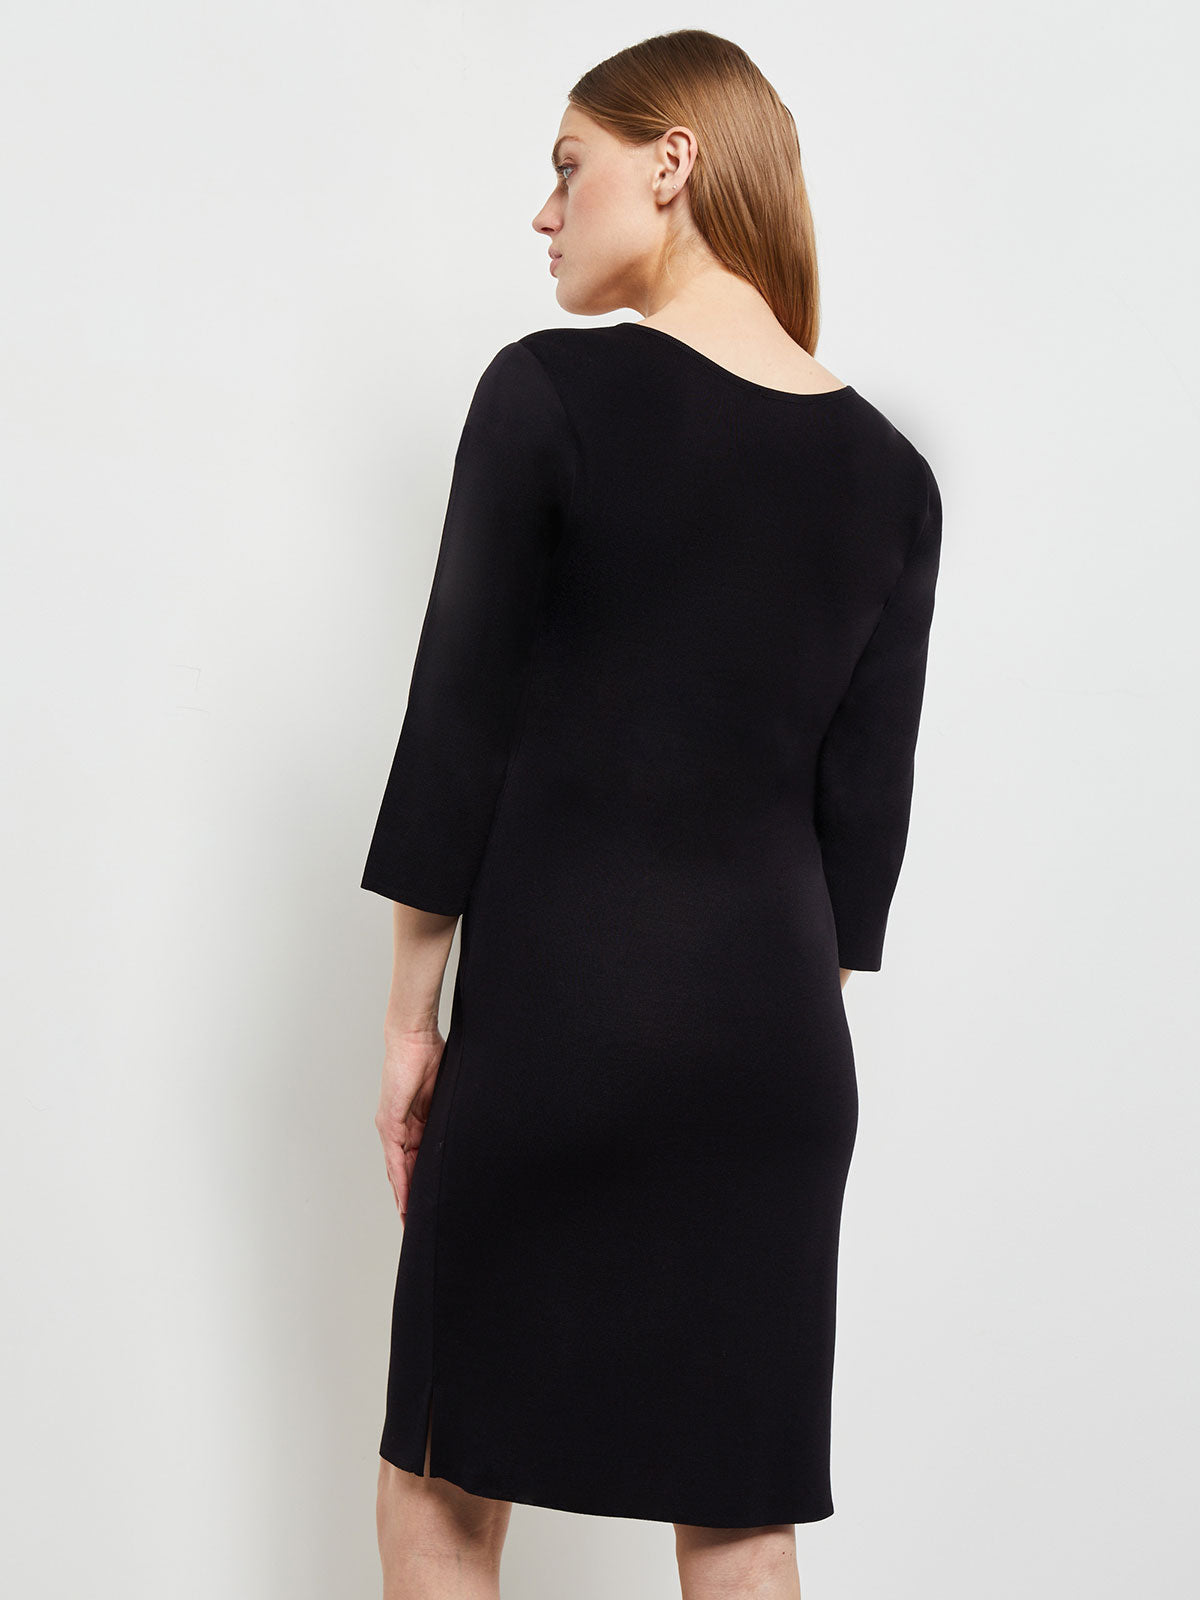 3/4 Sleeve Sheath Dress - Black Scoop Neck Dress